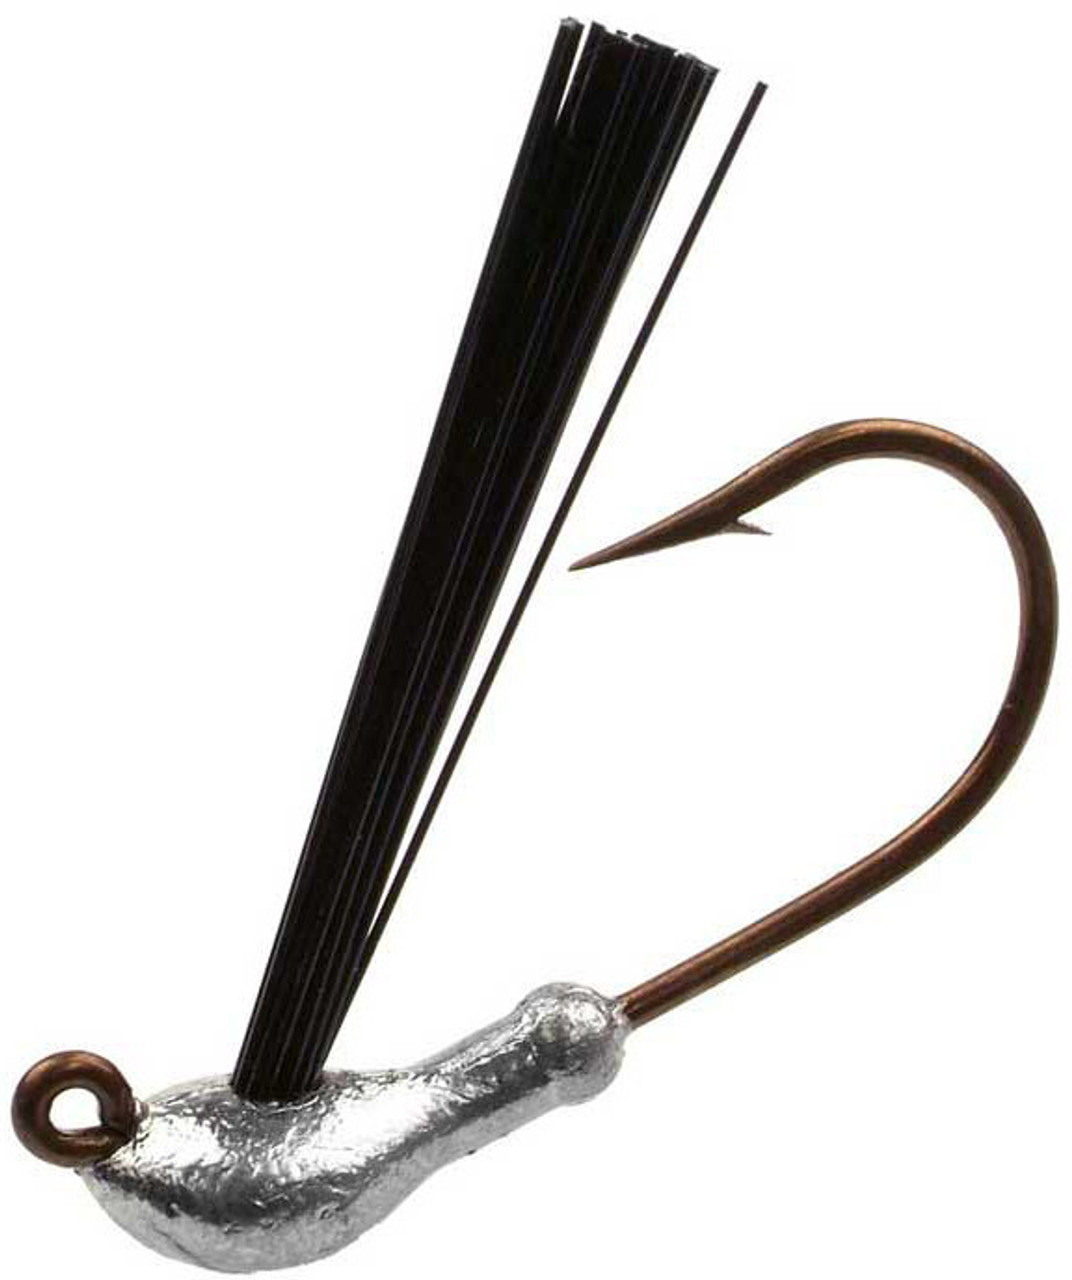 Do-It Bass Weedless Jig Mold 60 Degree Hook Model - Barlow's Tackle